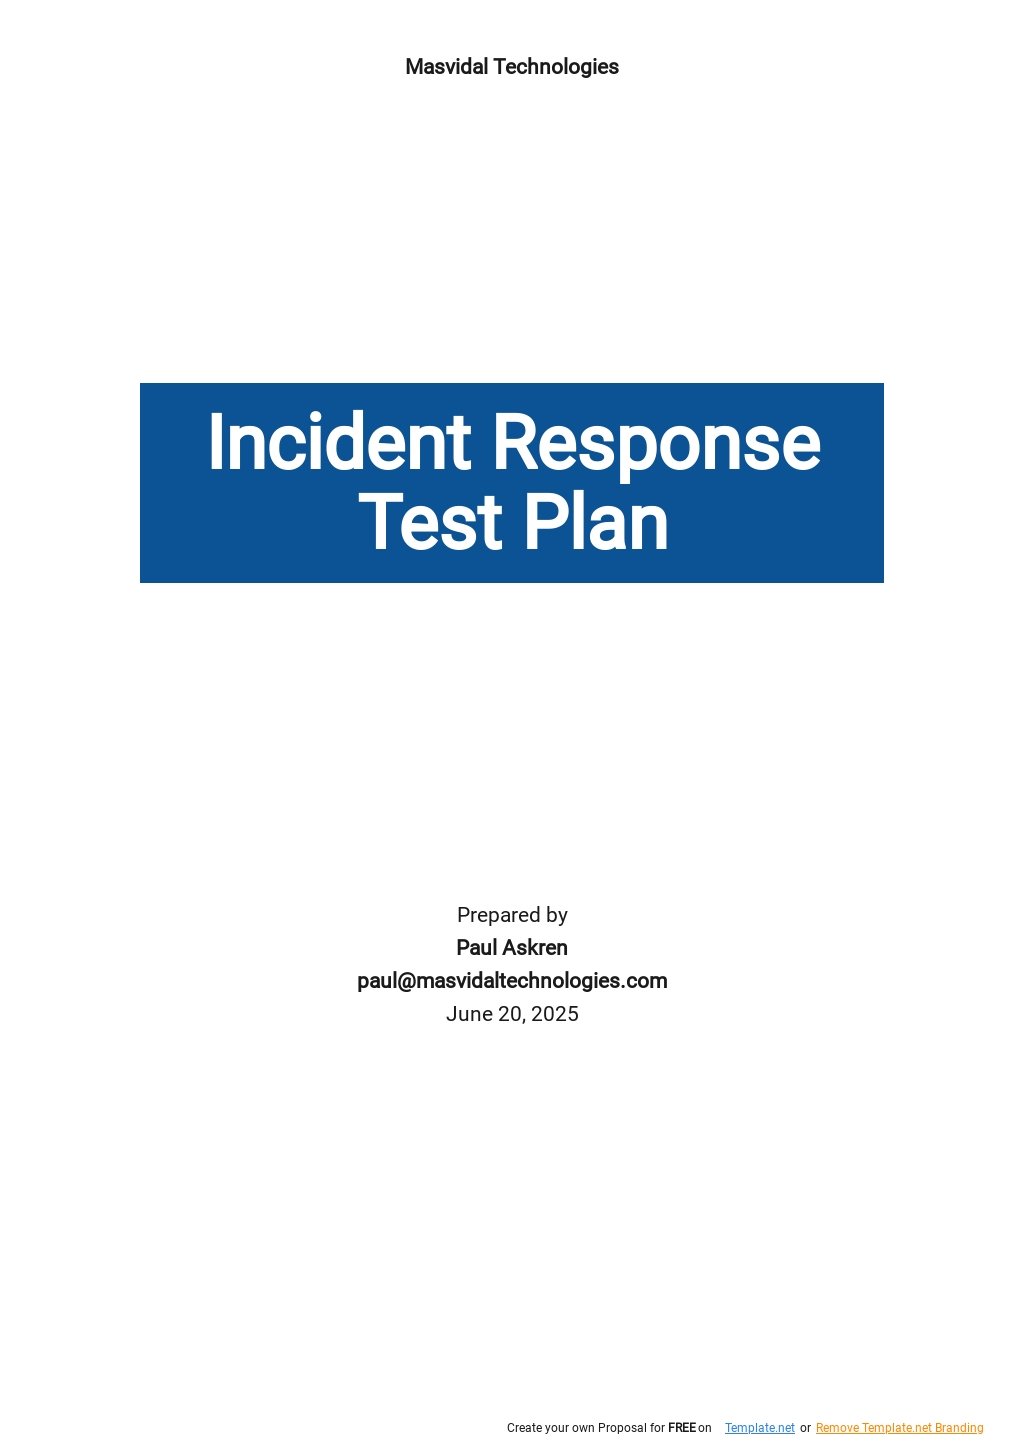 Incident Response Test Plan Template.jpe